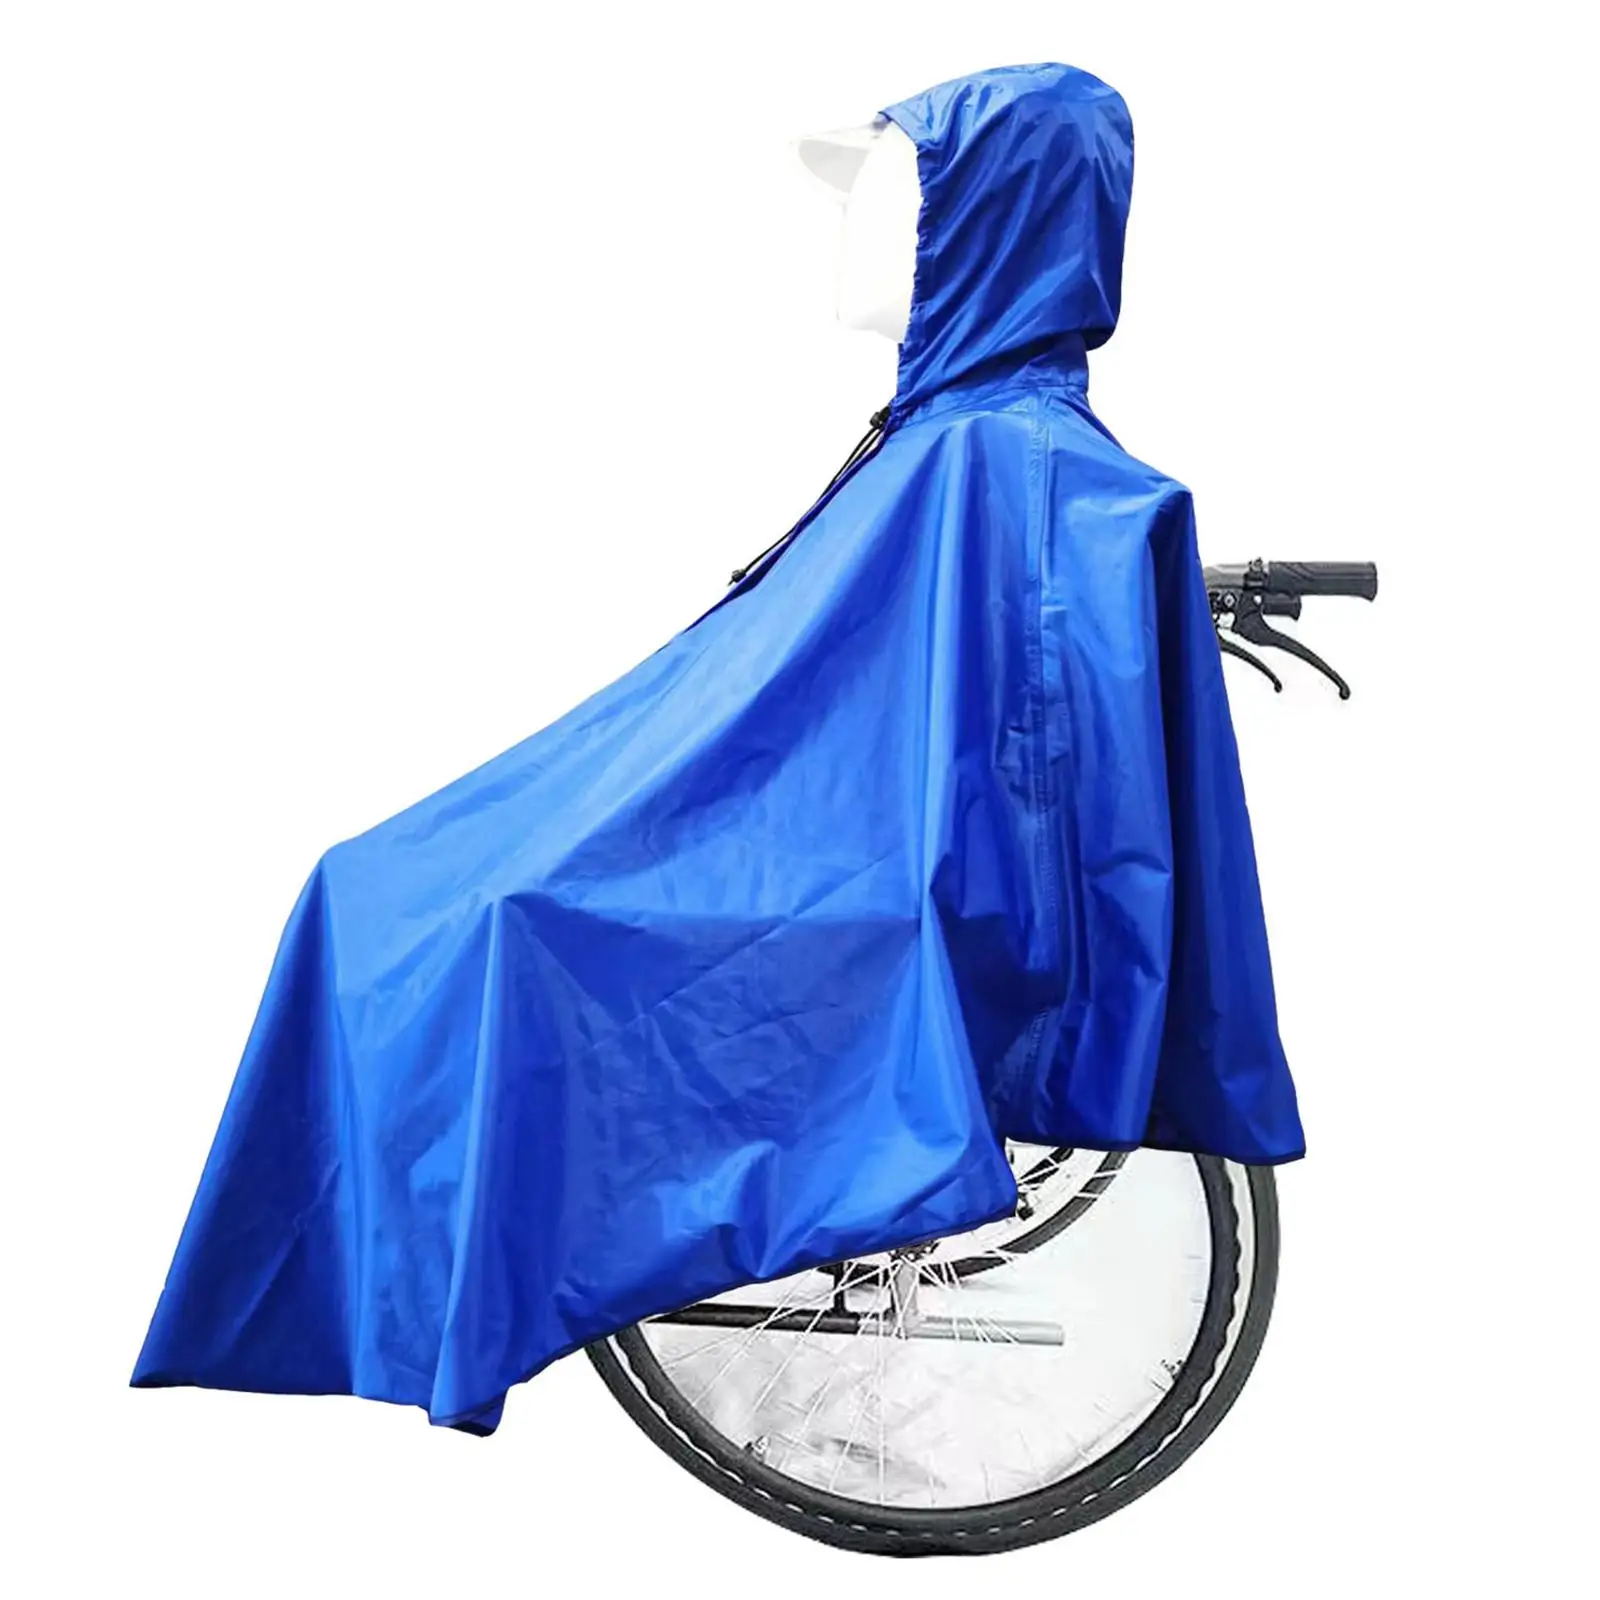 Wheelchair Poncho Reflective Strip Activity Reusable Rain Protection Cape